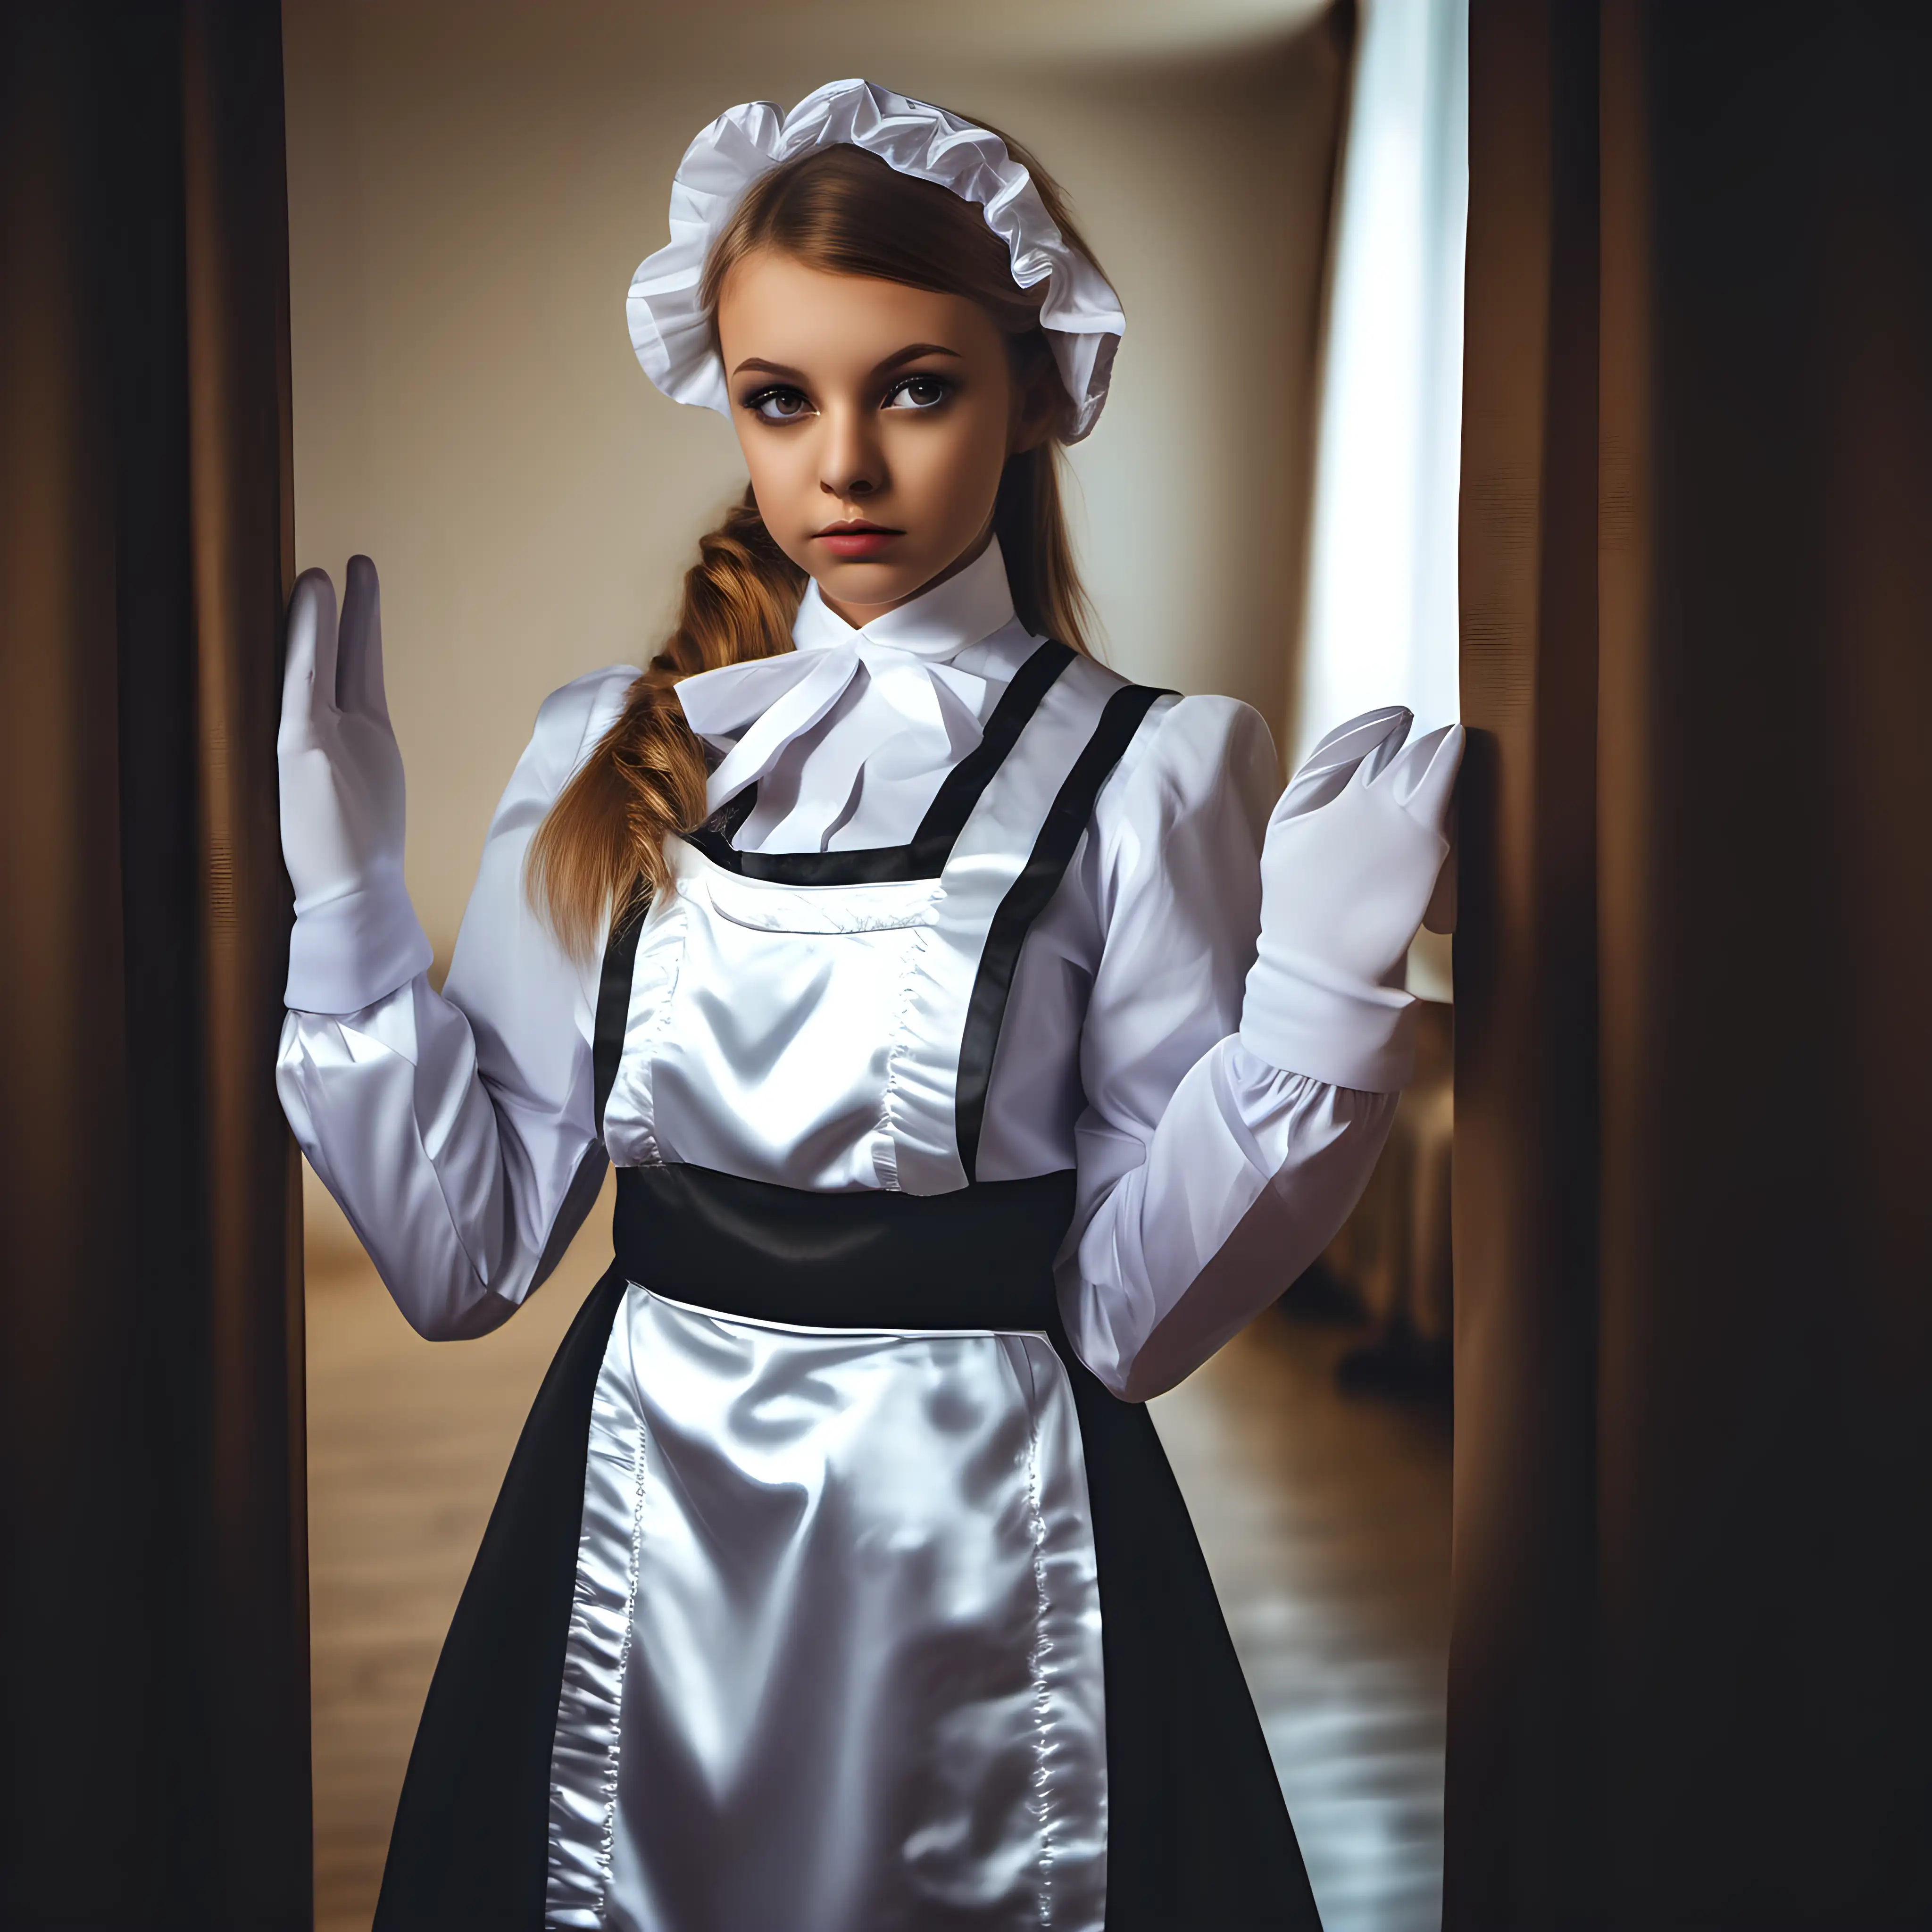 european Girl in satin long maid uniforms